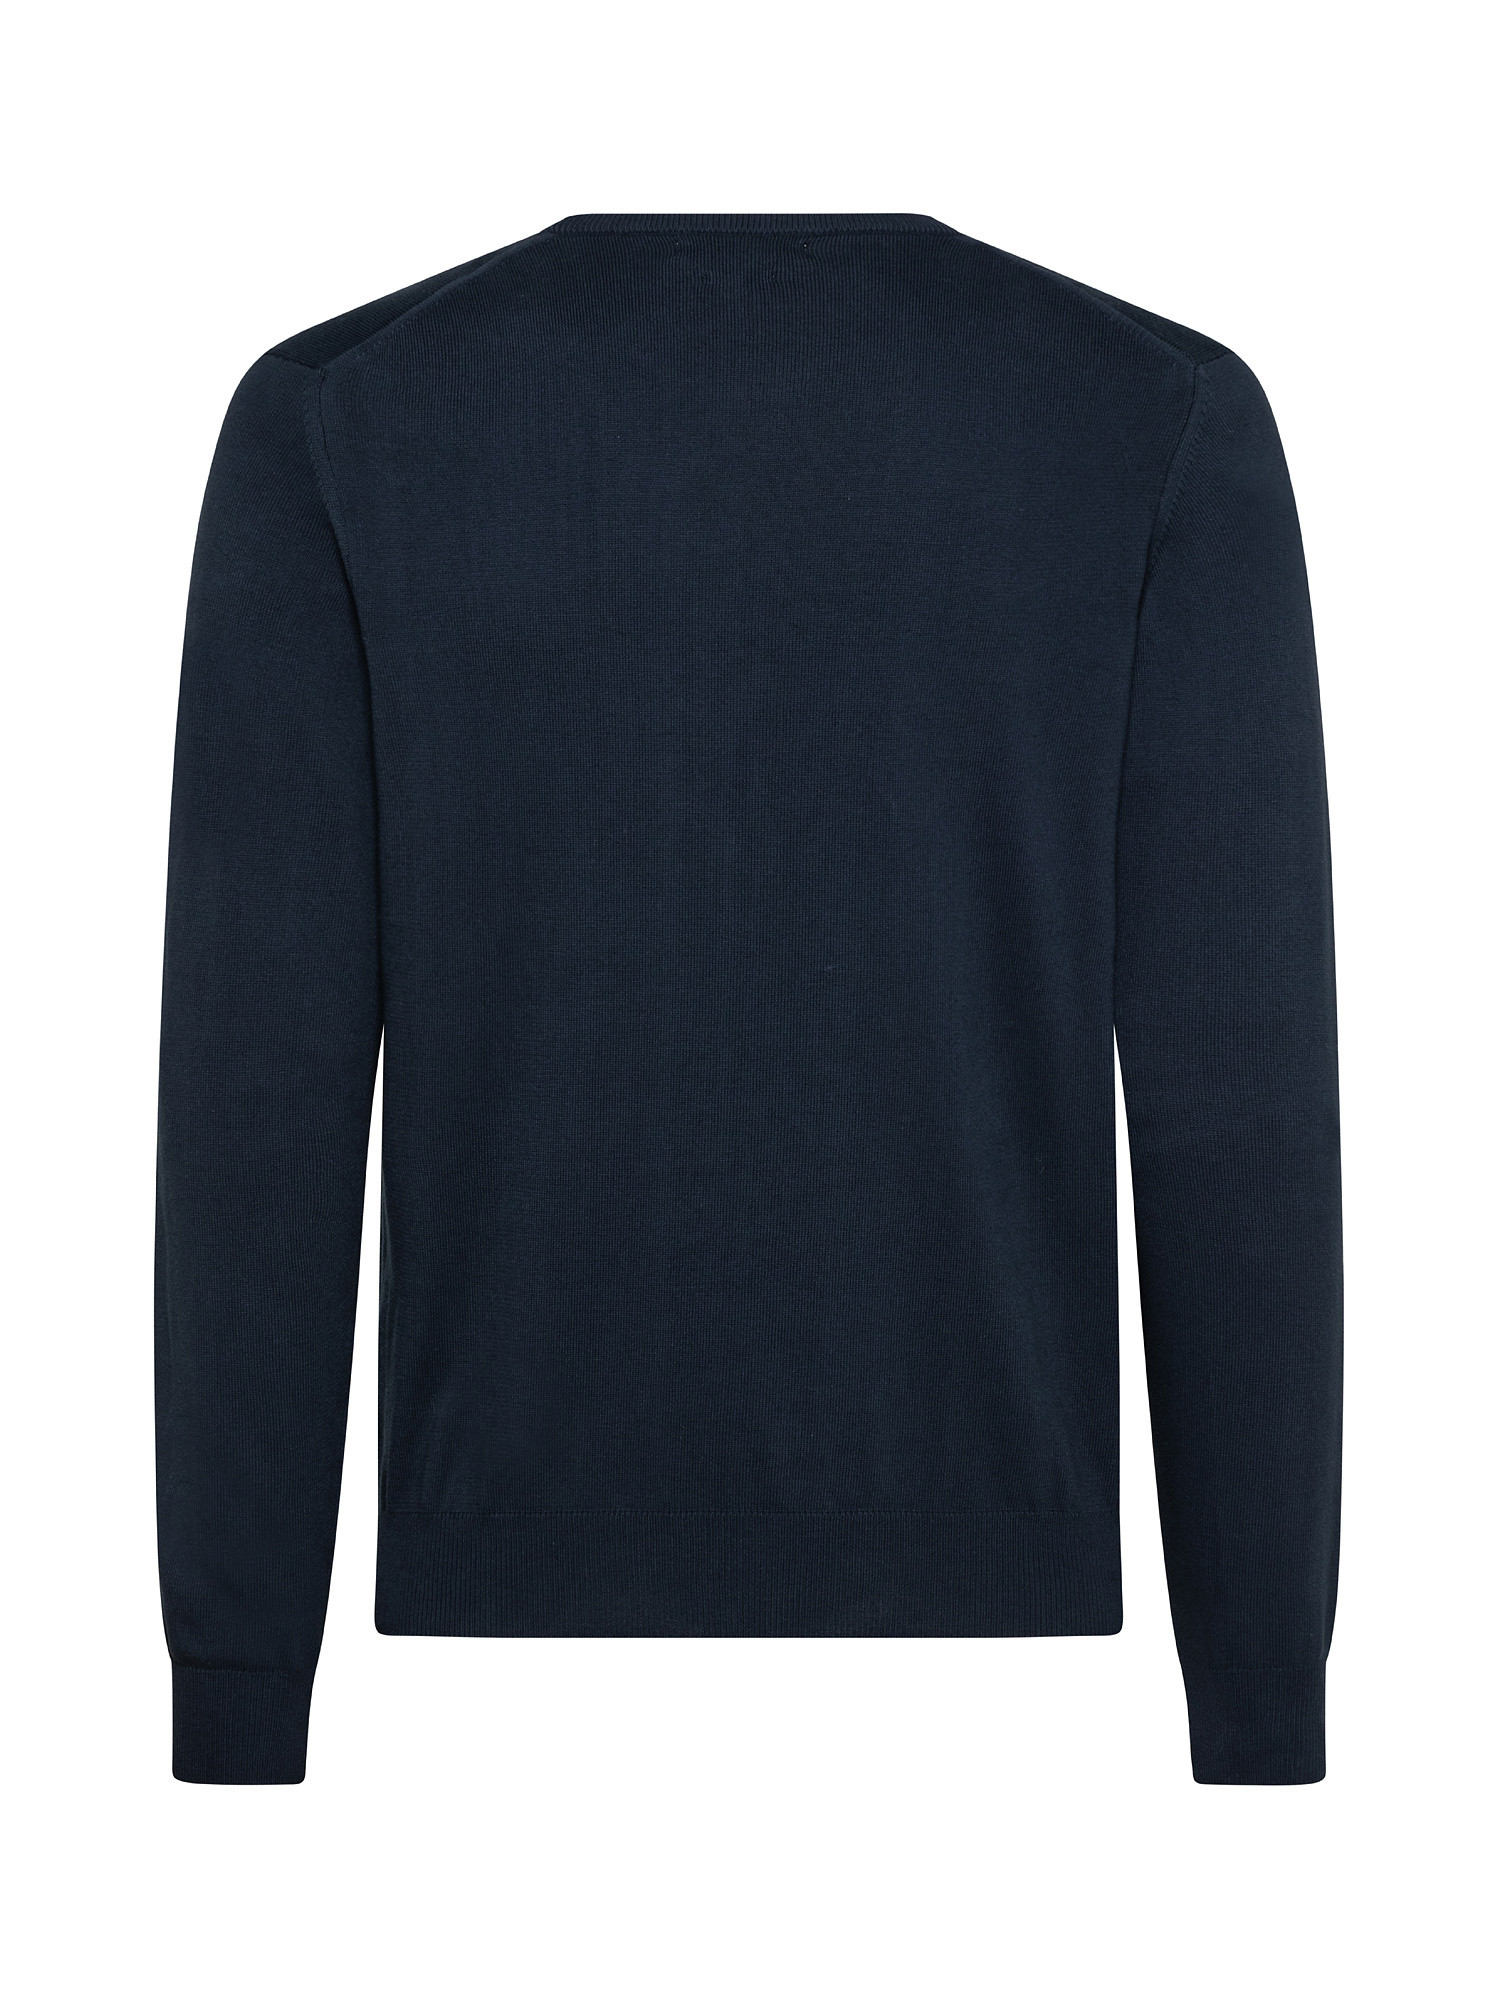 Pure cotton crewneck sweater, Dark Blue, large image number 1